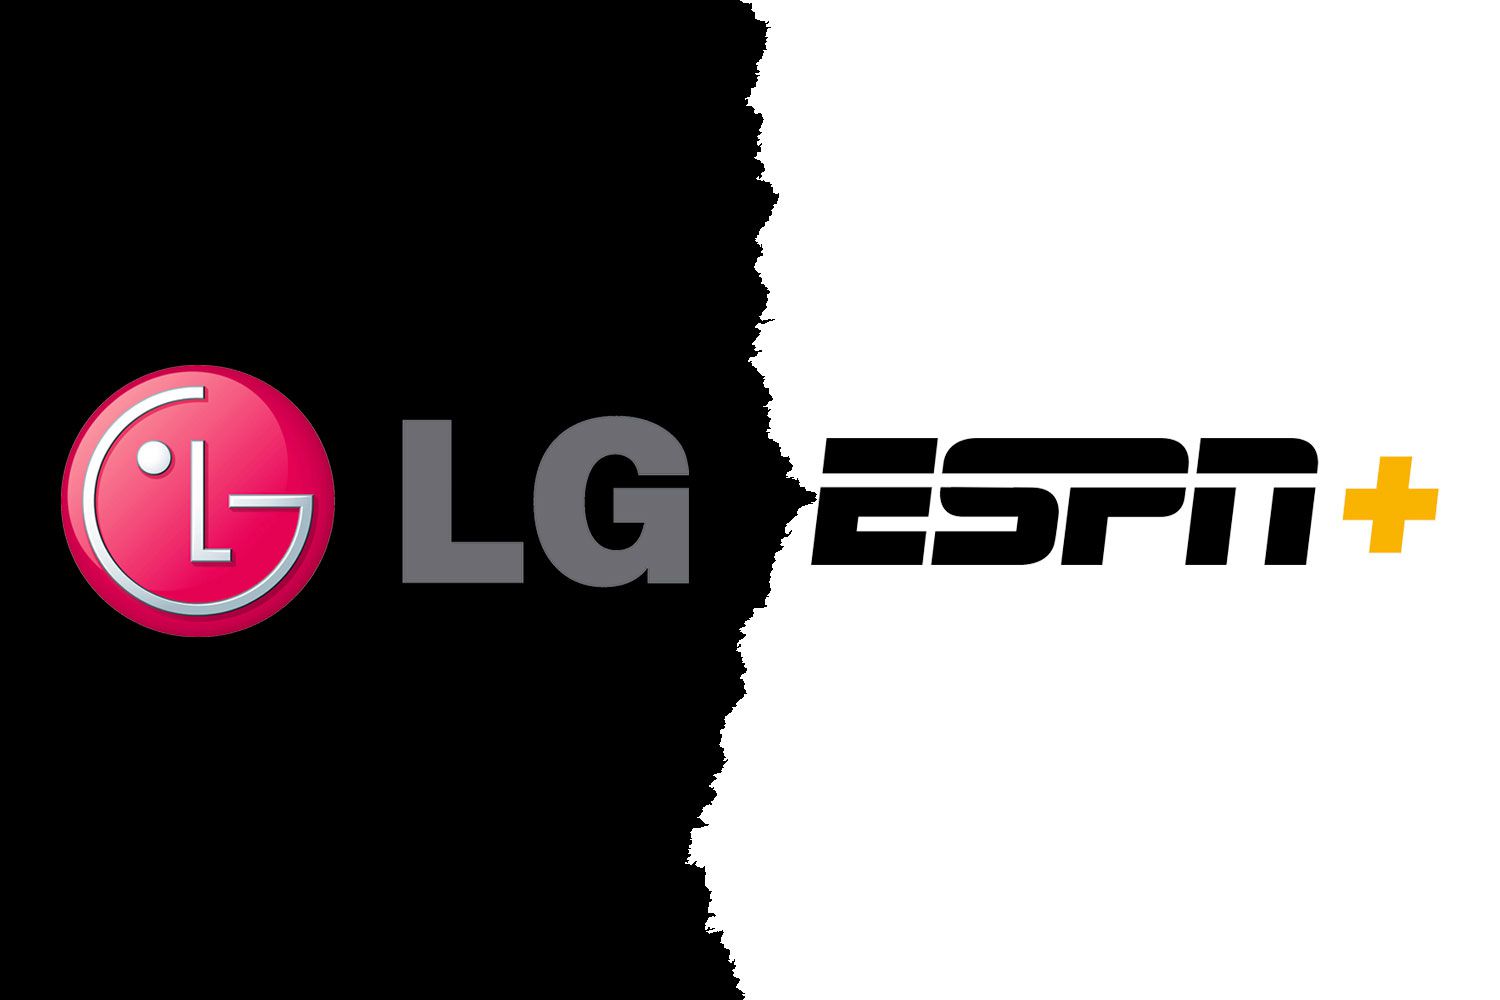 How To Download ESPN Plus App On LG Smart TV